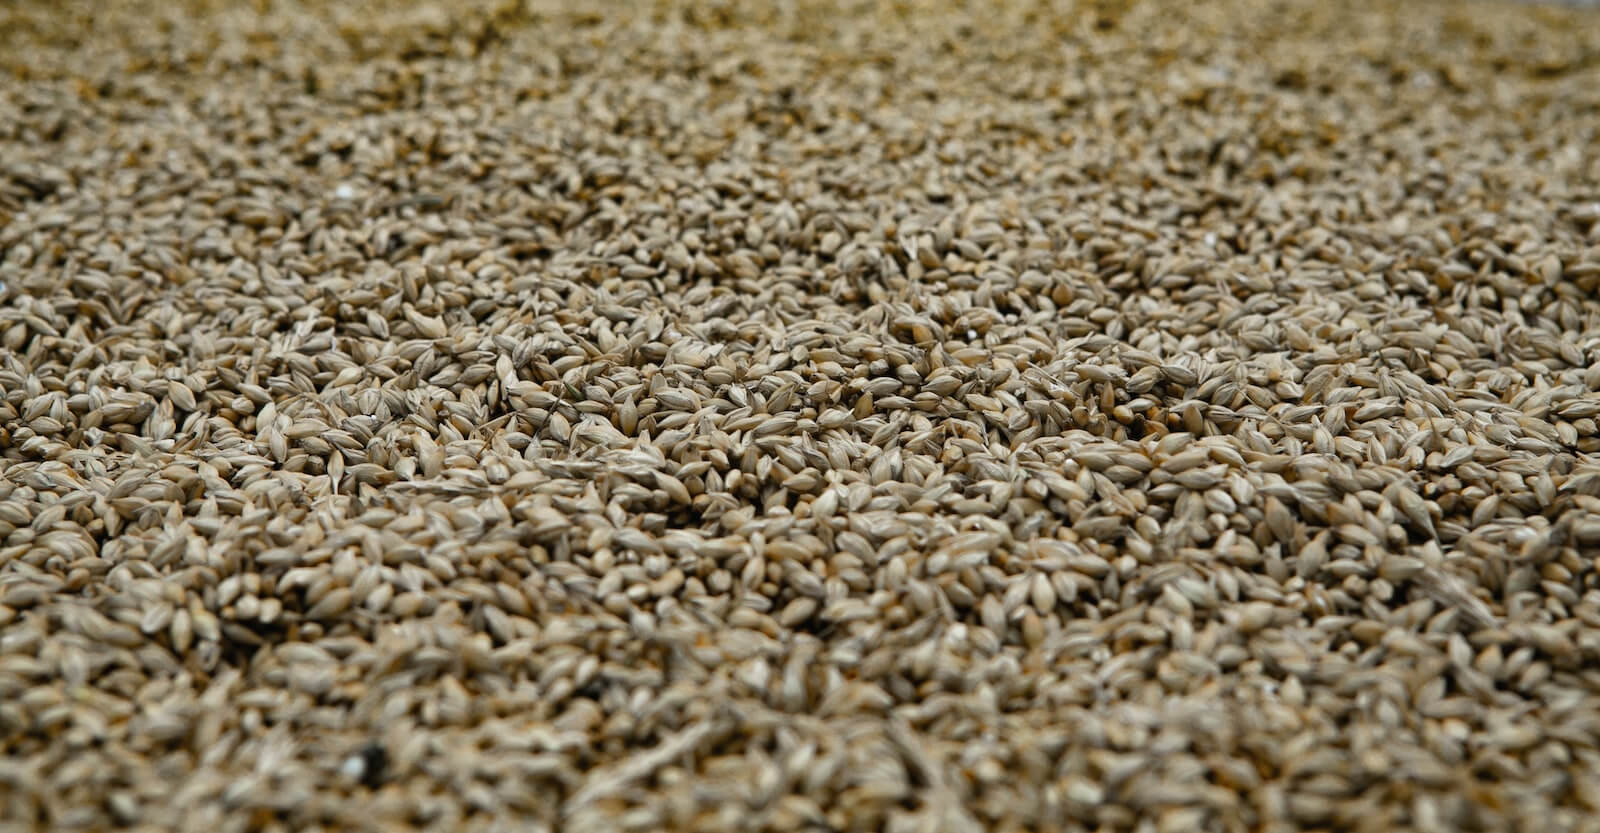 Barley seeds